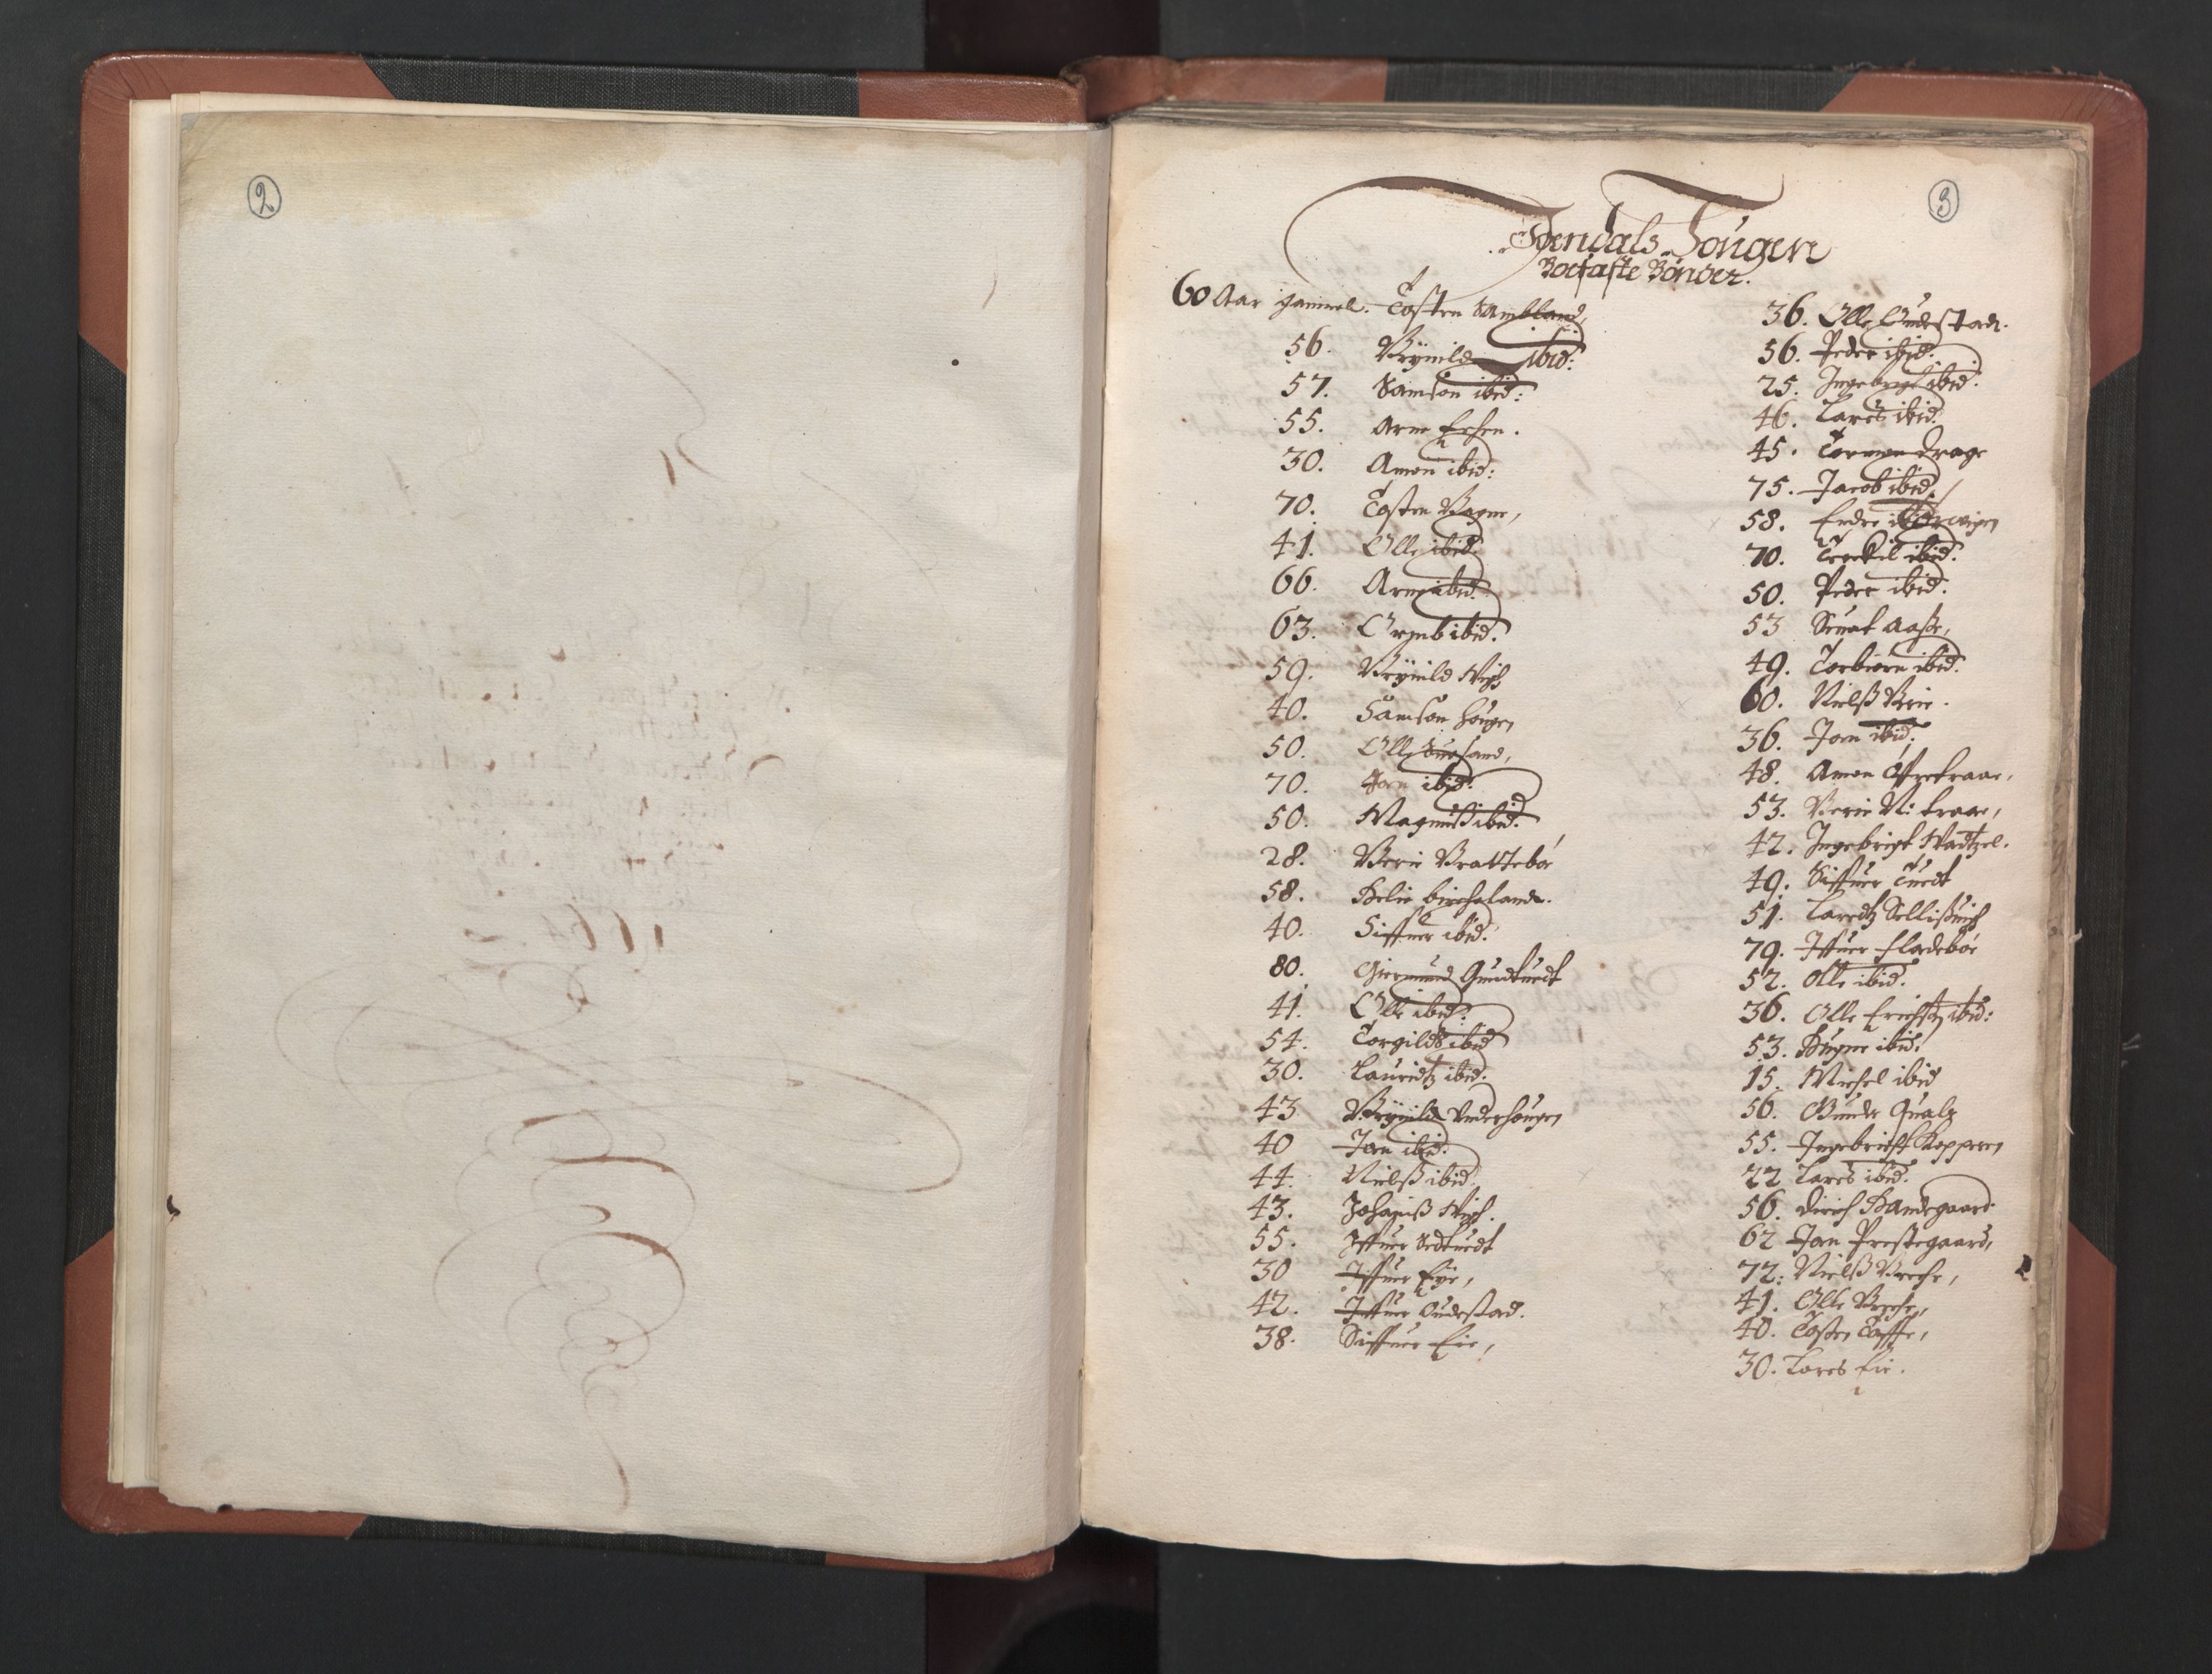 RA, Fogdenes og sorenskrivernes manntall 1664-1666, nr. 14: Hardanger len, Ytre Sogn fogderi og Indre Sogn fogderi, 1664-1665, s. 2-3